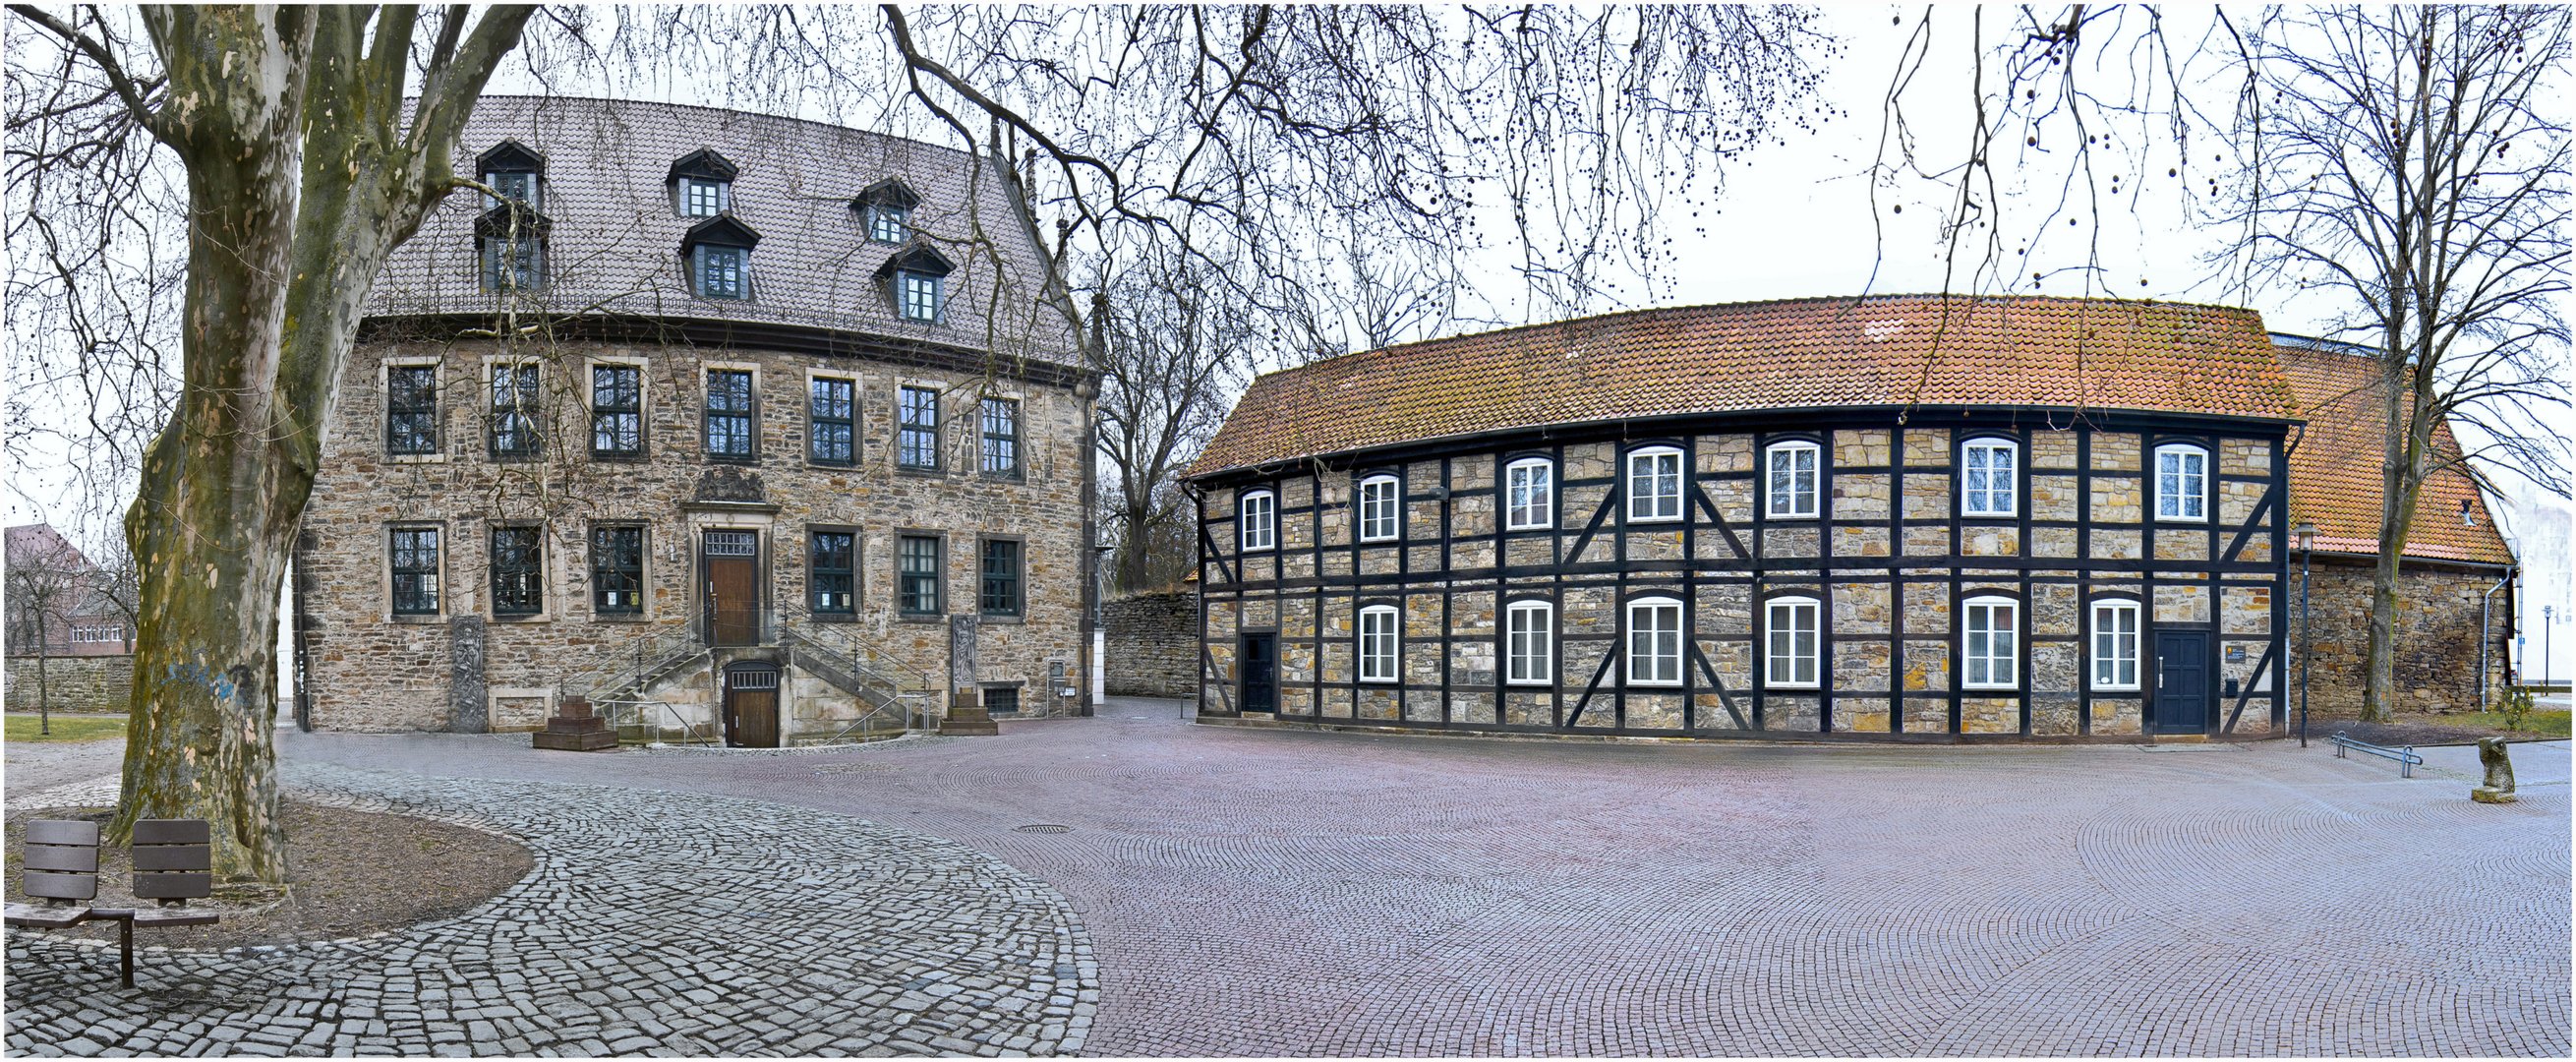 Landsbergscher Hof und Zehntscheune, Stadthagen